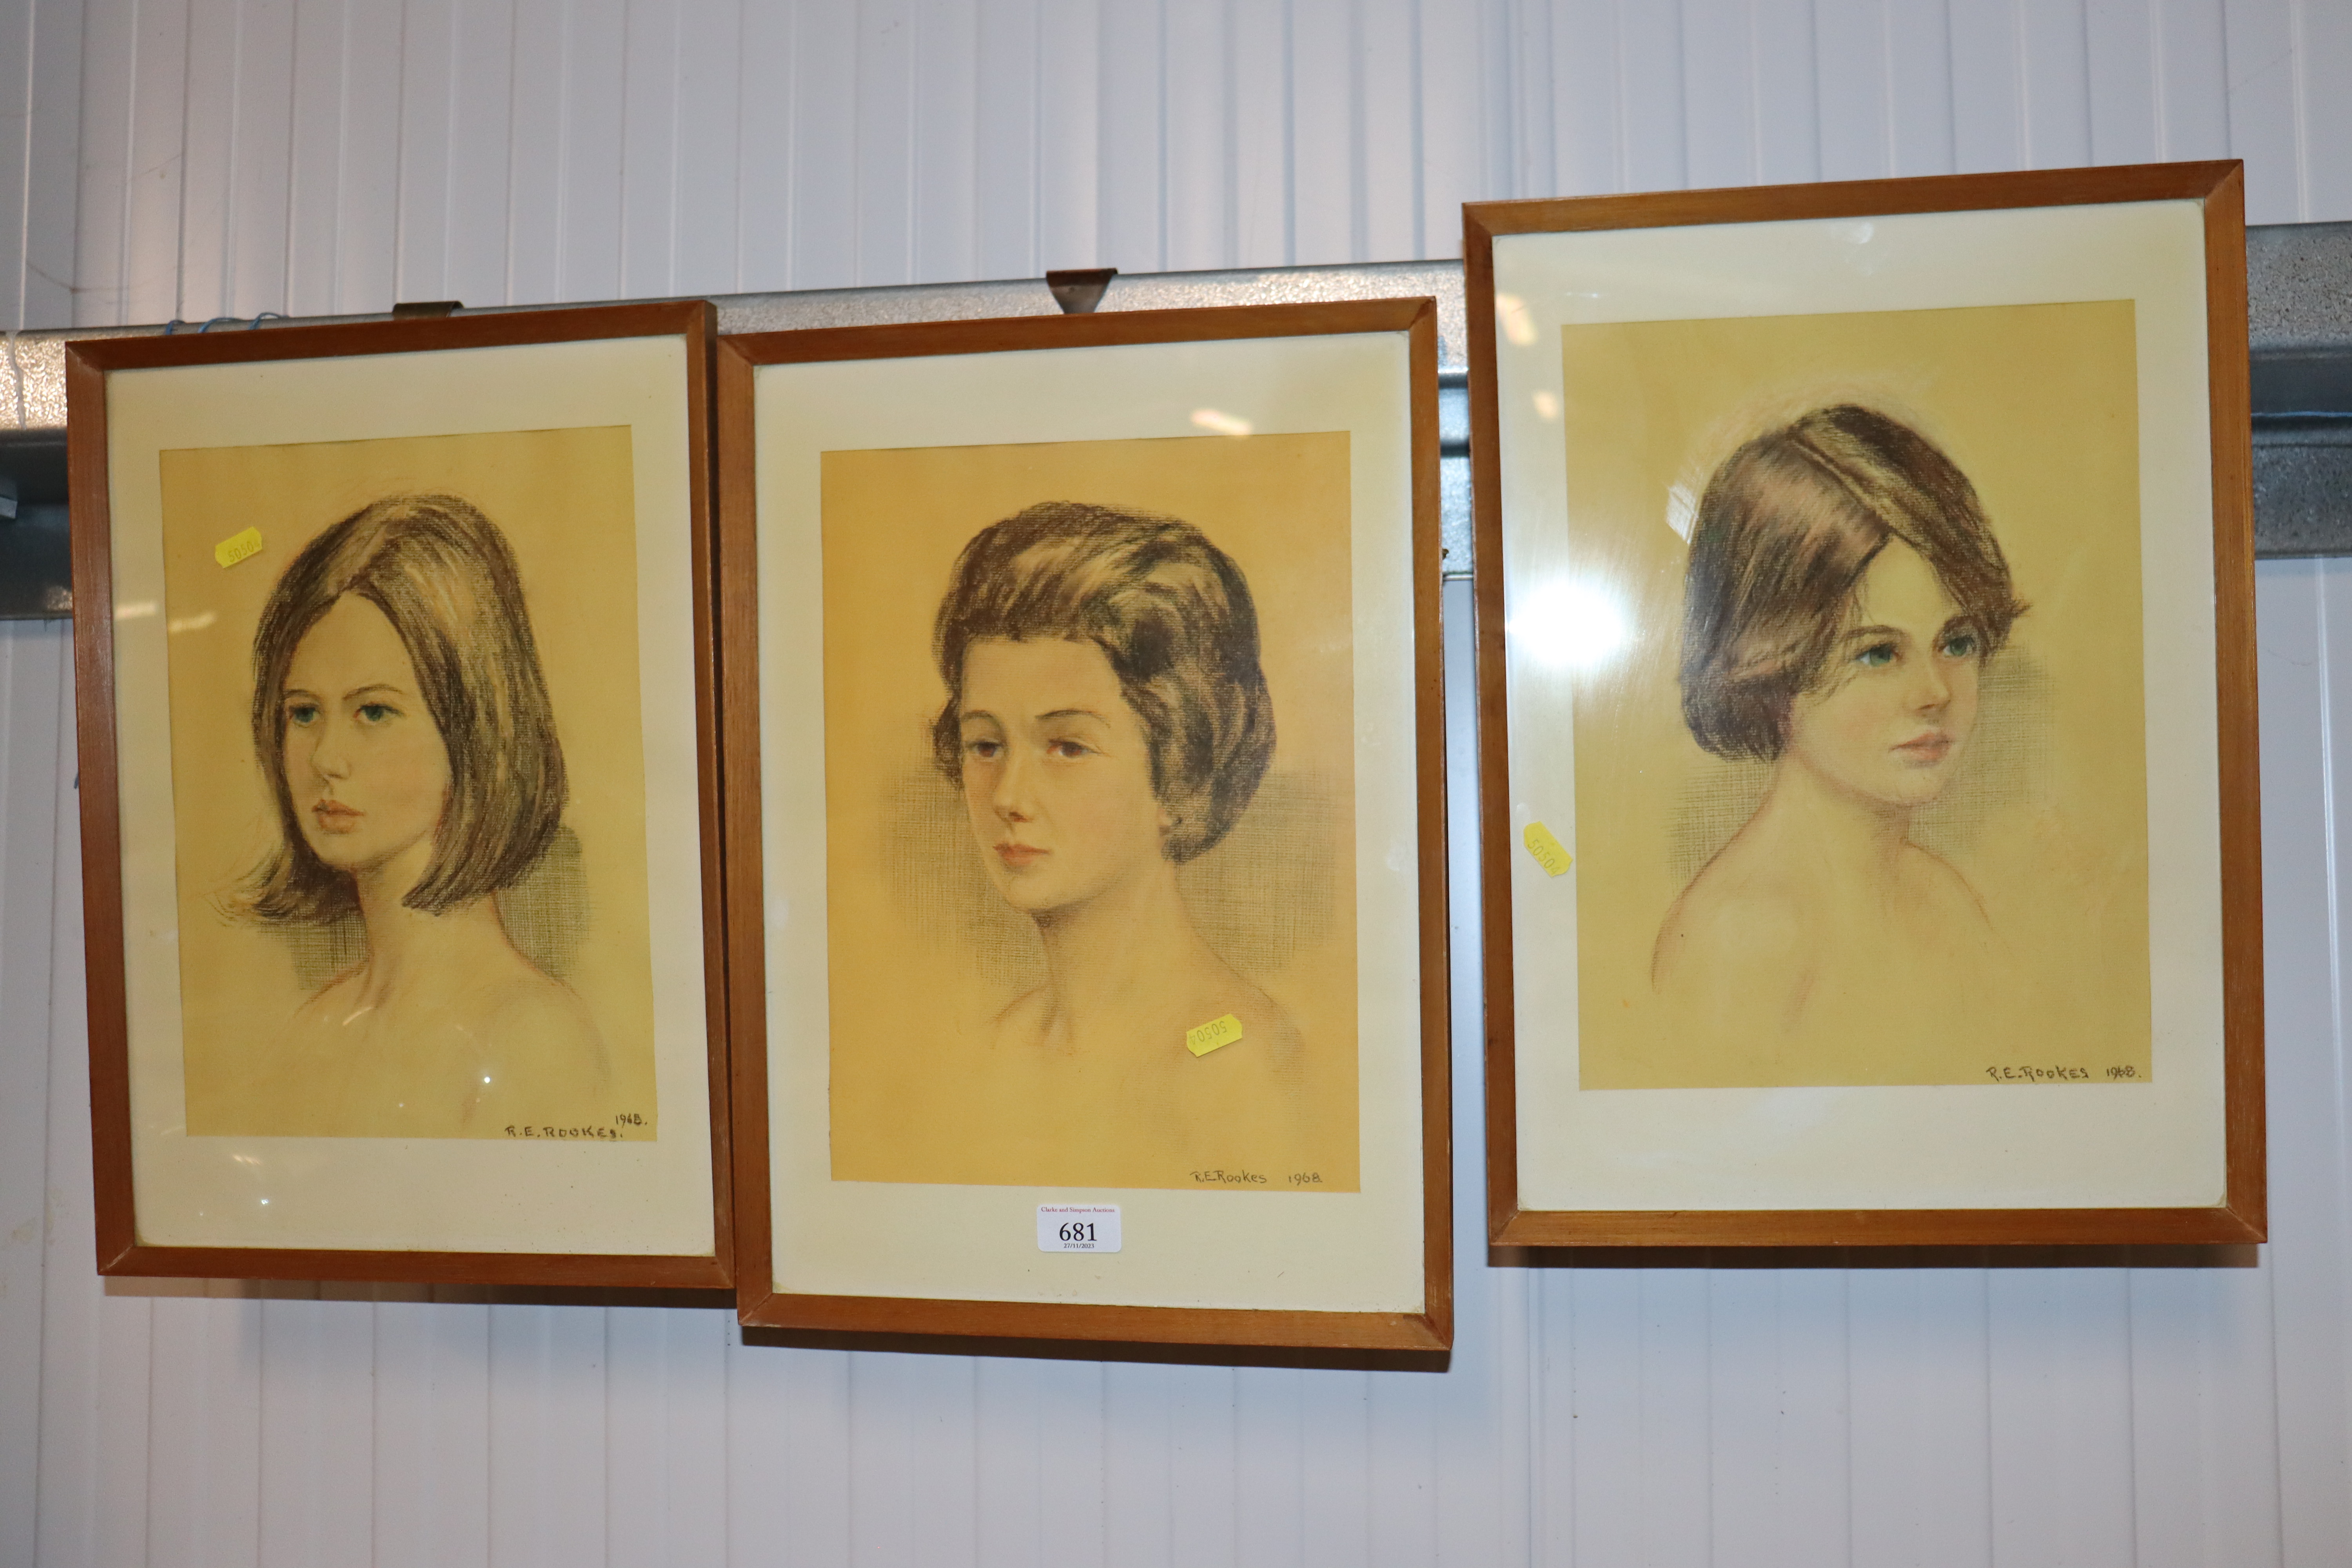 R E Rookes, three portrait studies